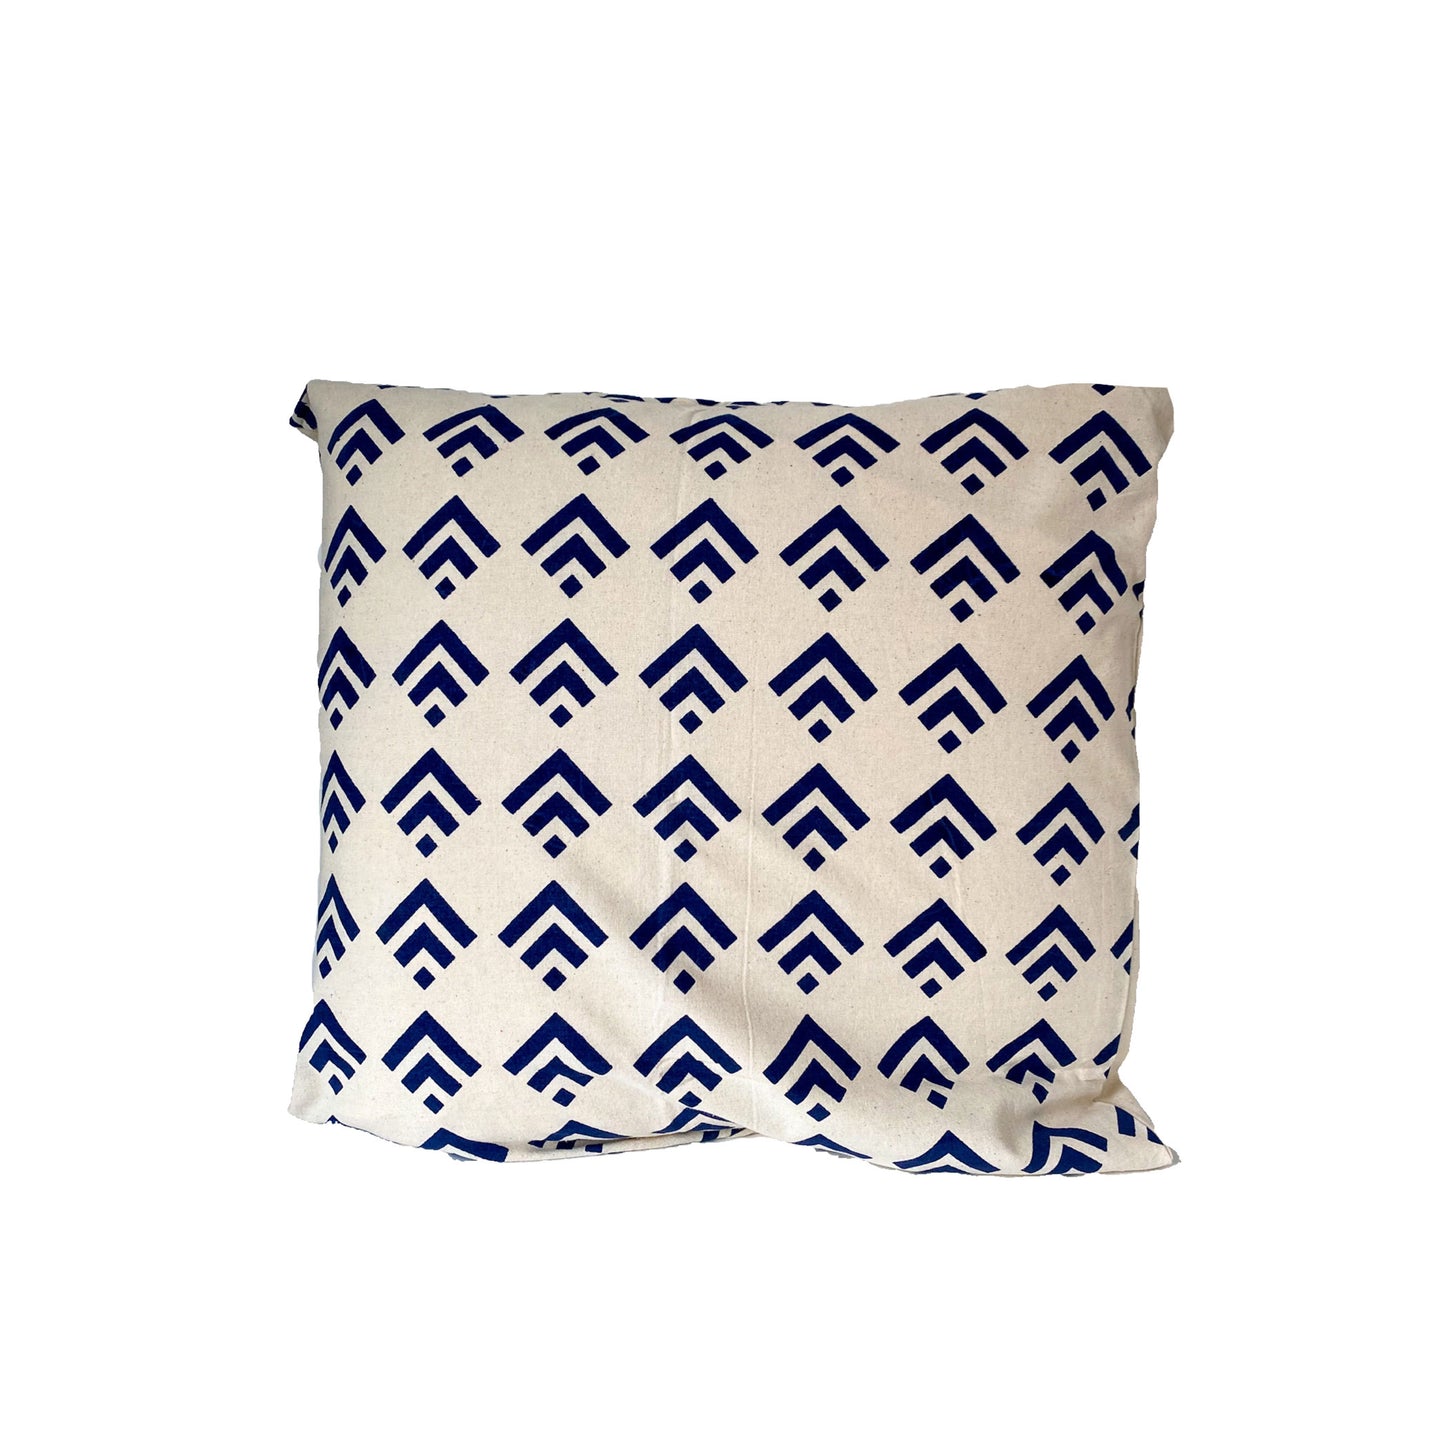 stella decor cushion cover in design sea floor in color navy blue white original